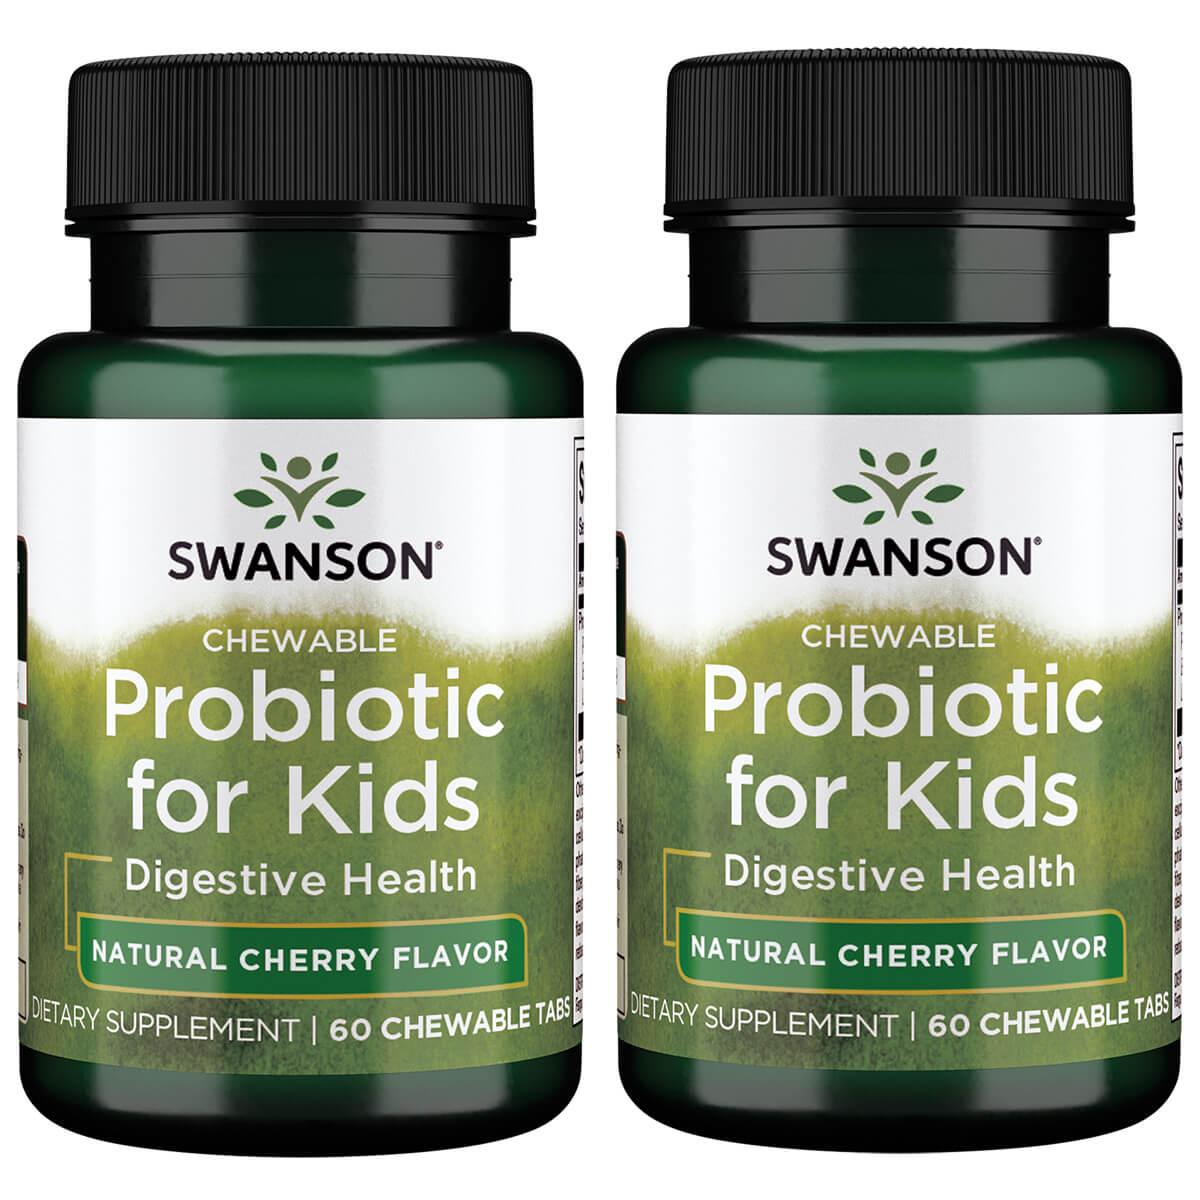 Swanson Probiotics Chewable Probiotic for Kids - Natural Cherry Flavor 2 Pack Supplement Vitamin 3 Billion CFU 60 Chewables